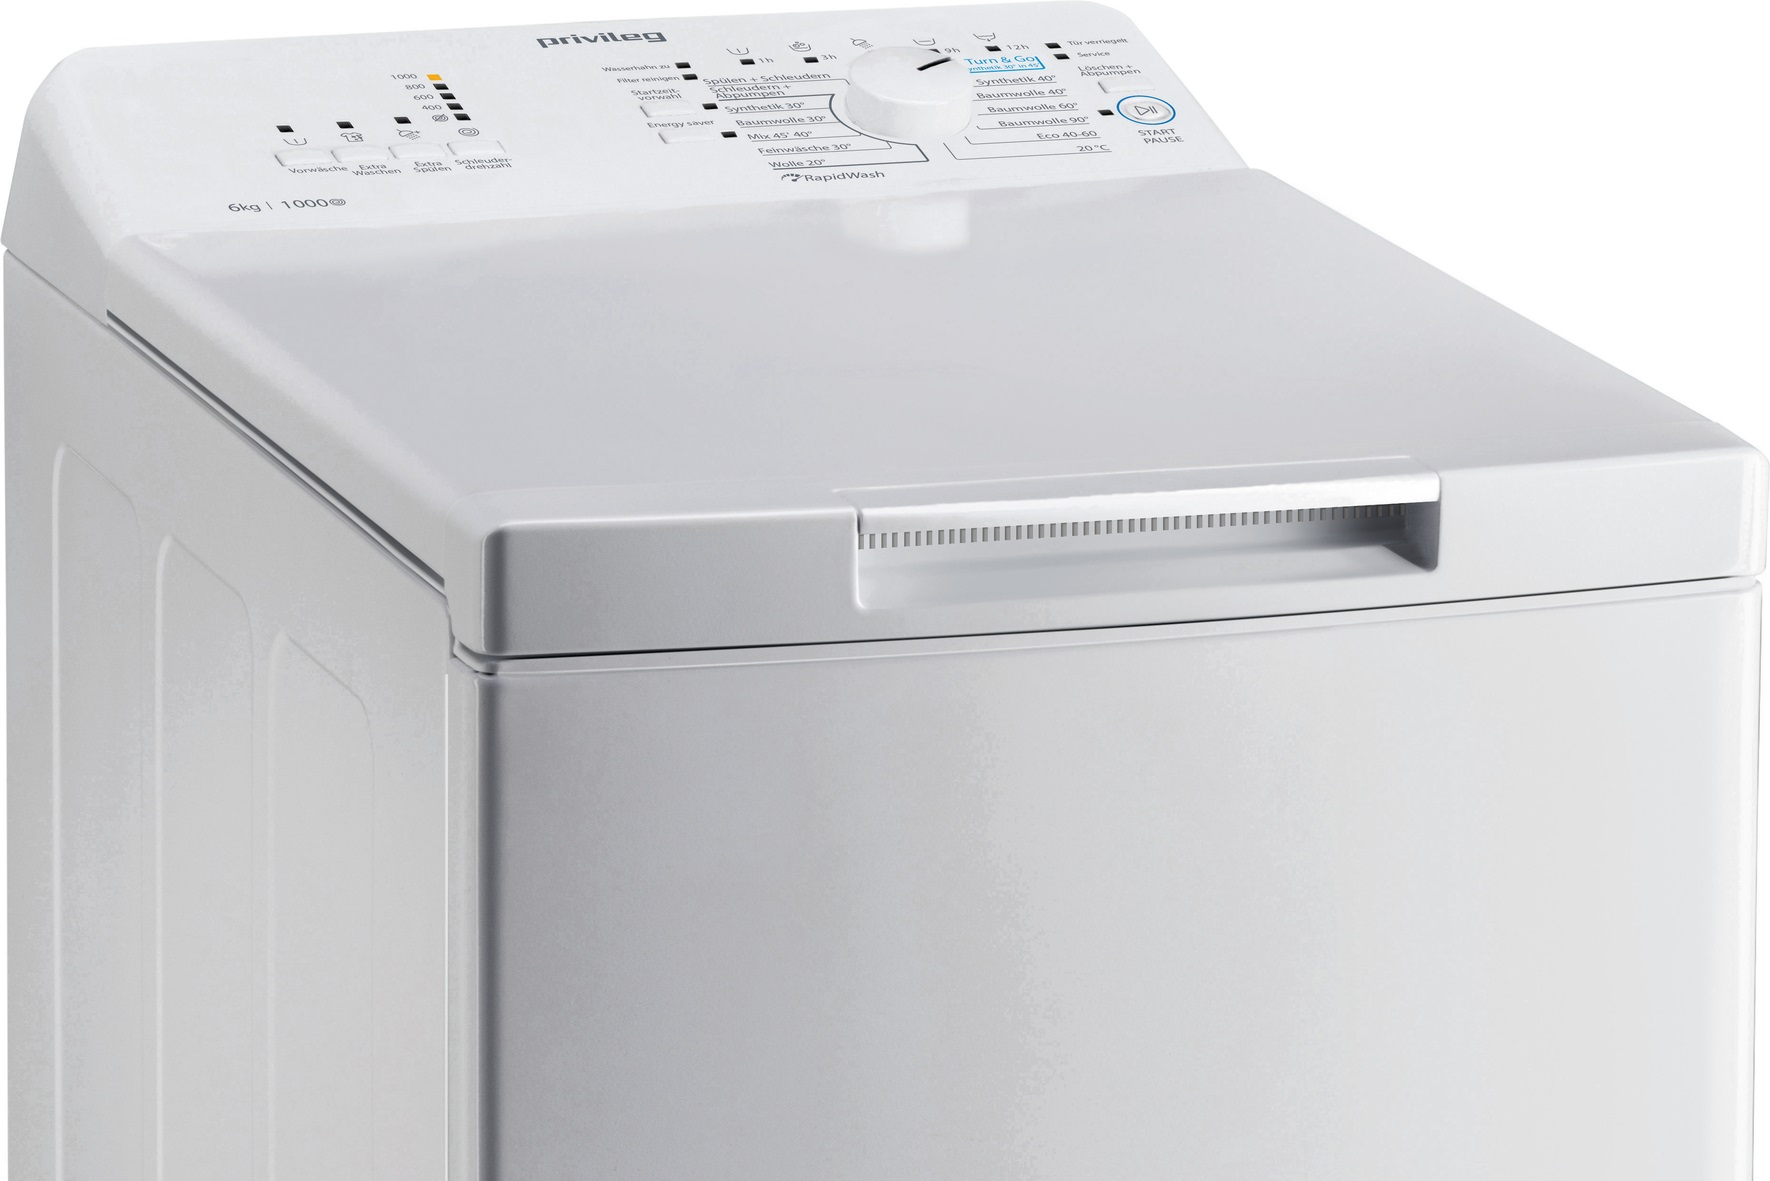 PRIVILEG PWT L60300 U/Min., (6 DE/N 951 D) kg, Waschmaschine